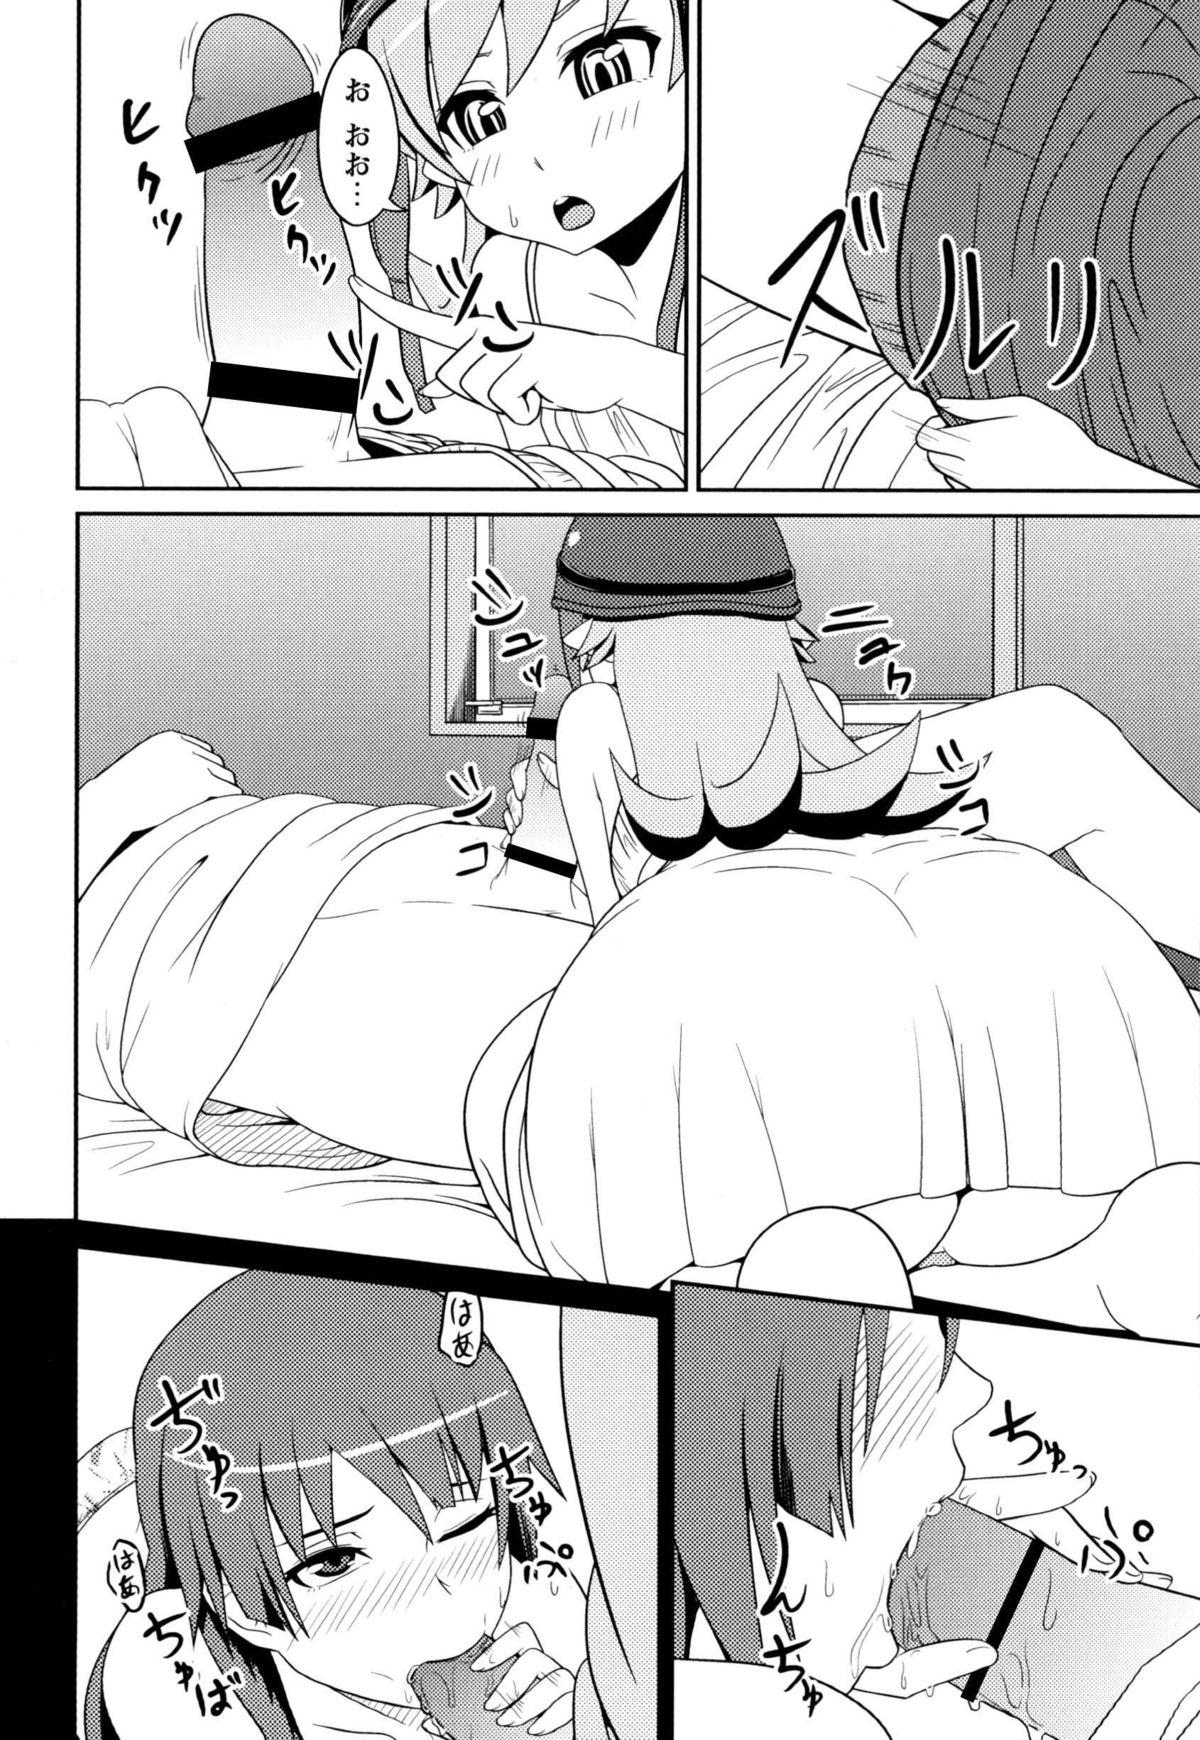 Girlfriend Dream of one day - Bakemonogatari Style - Page 6